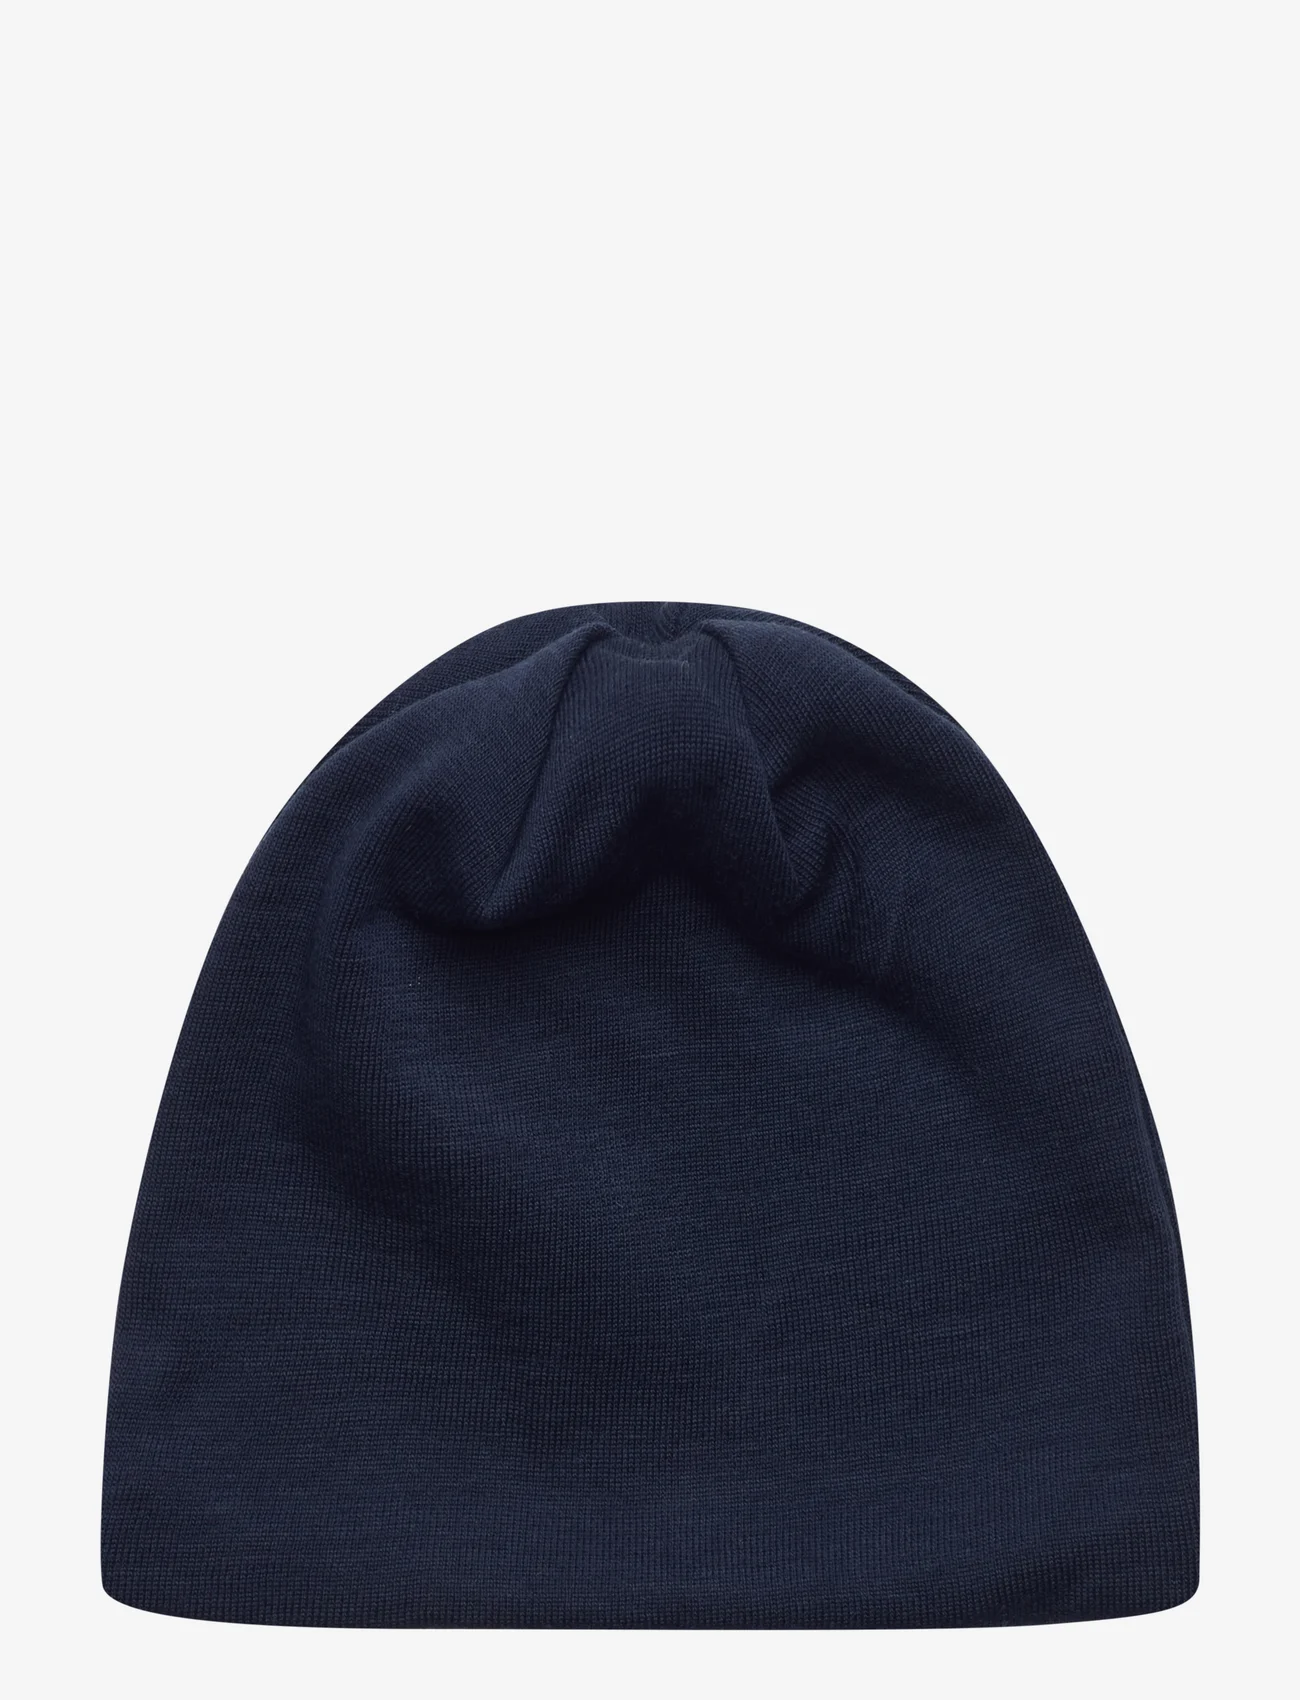 mikk-line - Wool Hat - Solid - lägsta priserna - blue nights - 1